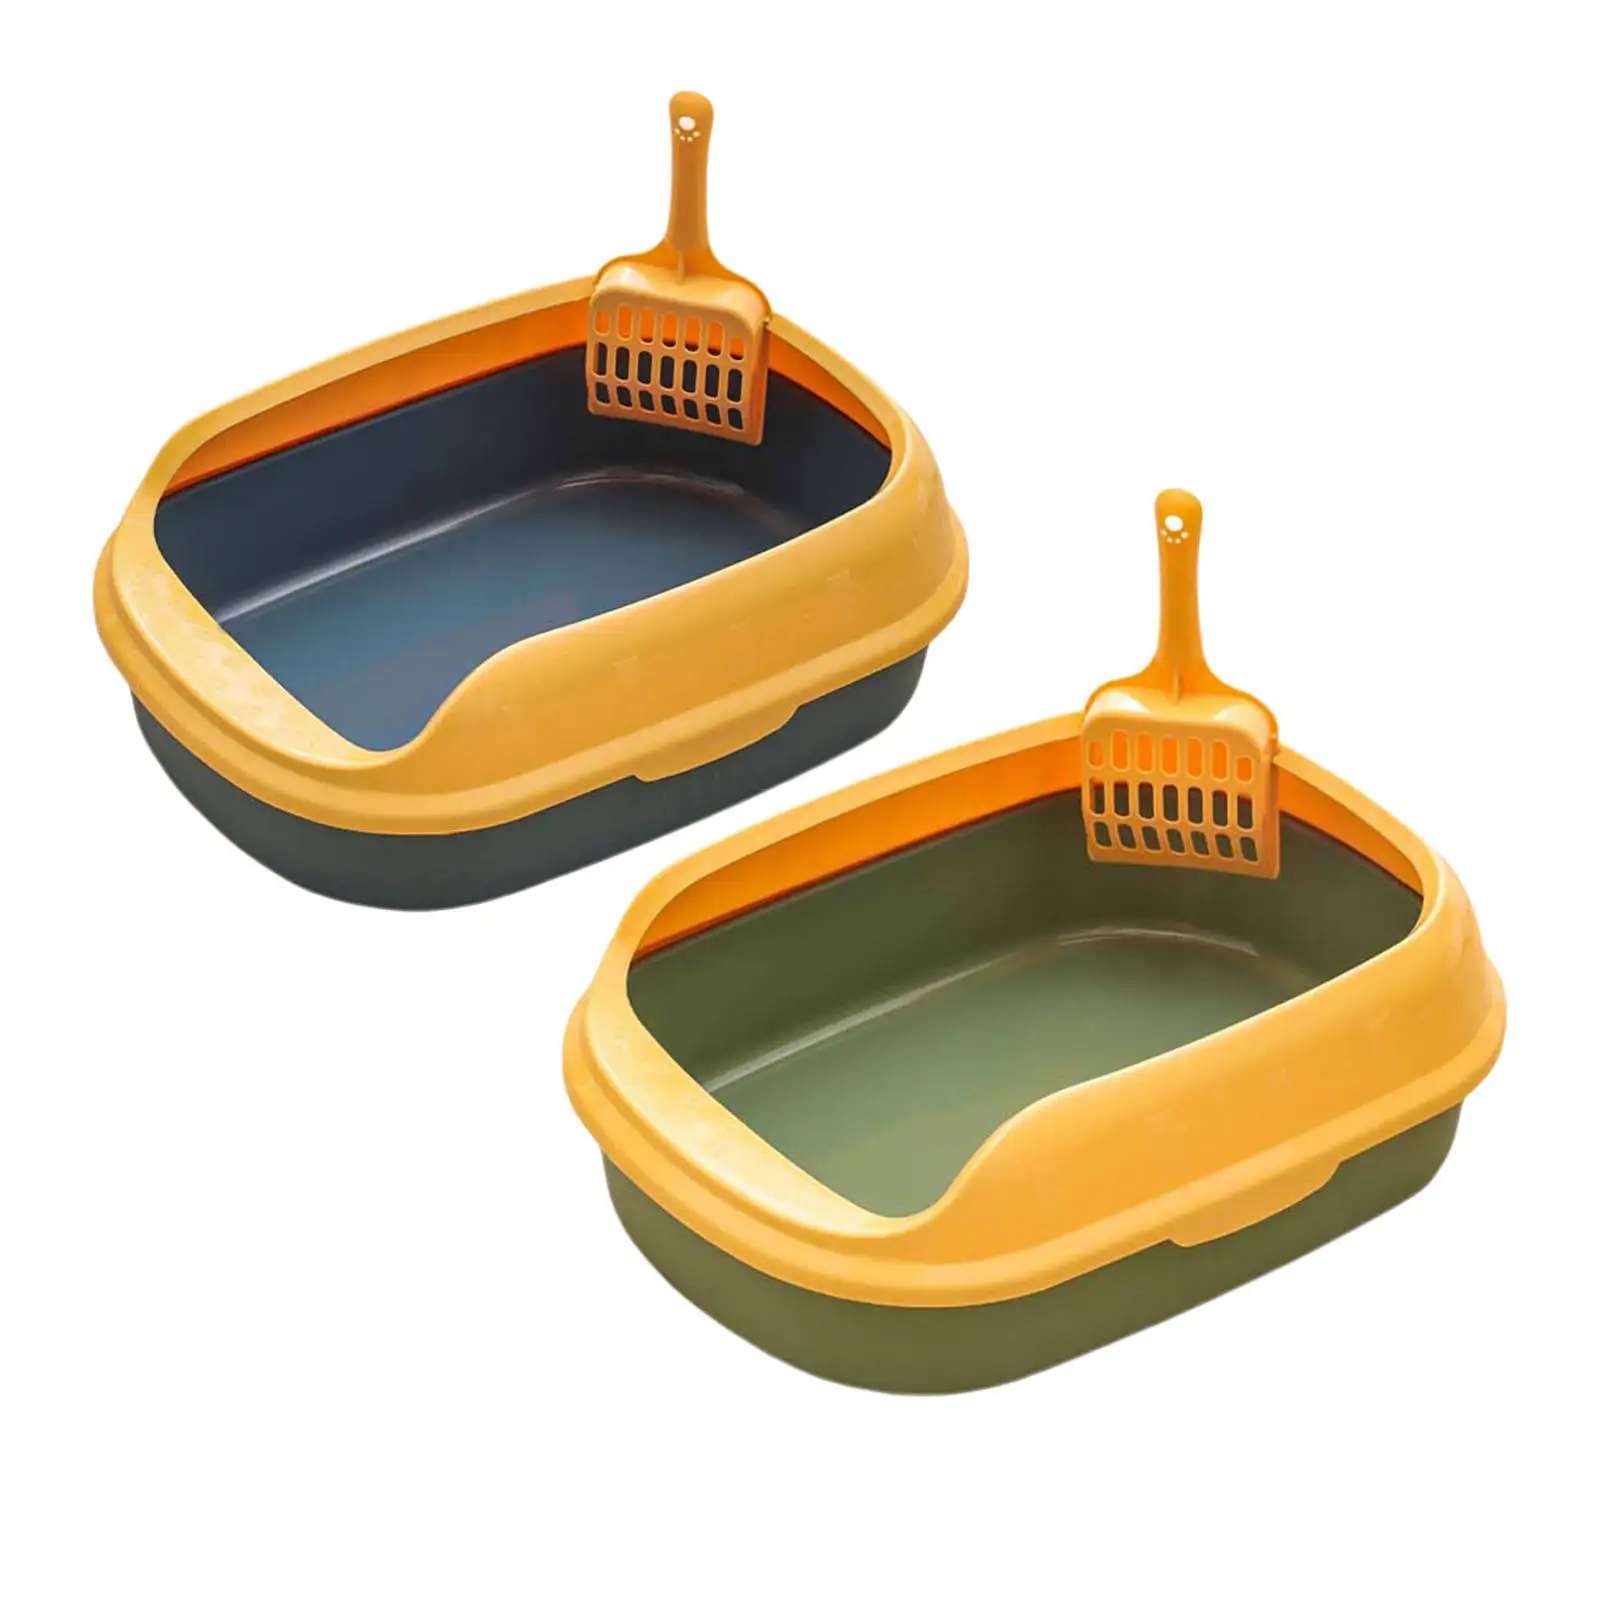 Durable Cat Litter Box Plastic Litter Tray Kitten Litter Pan Anti-Splash Easy Clean Toilet Shovel Container Bedpan Accessories